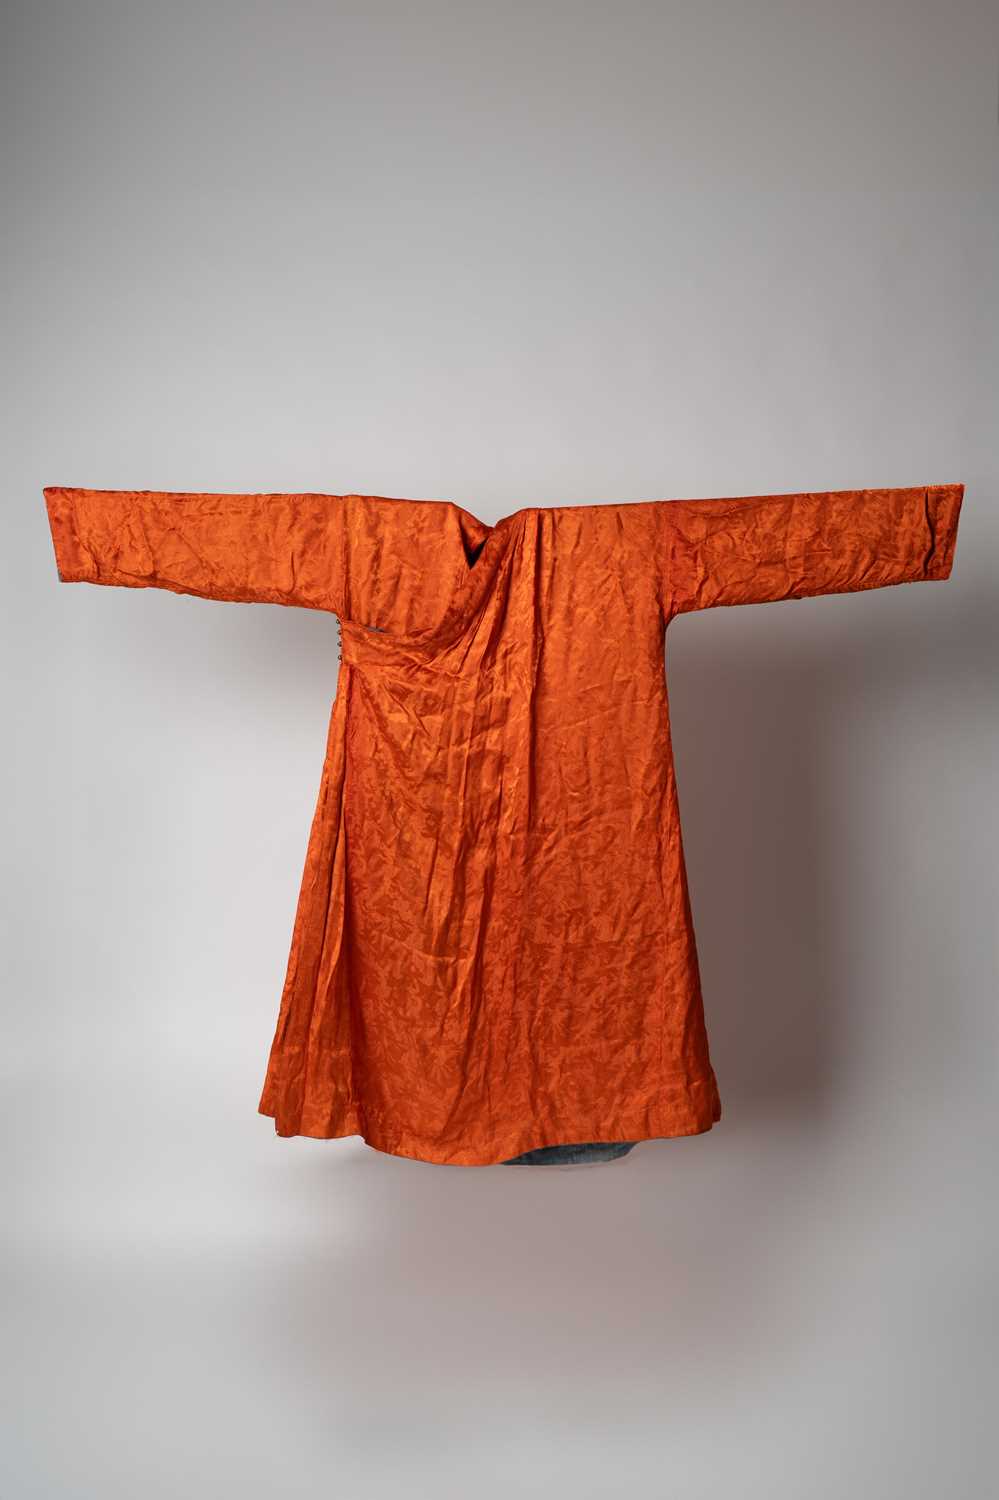 A SINO-TIBETAN ORANGE SILK BROCADE ROBE, CHUBA QING DYNASTY The robe closing on the right side and